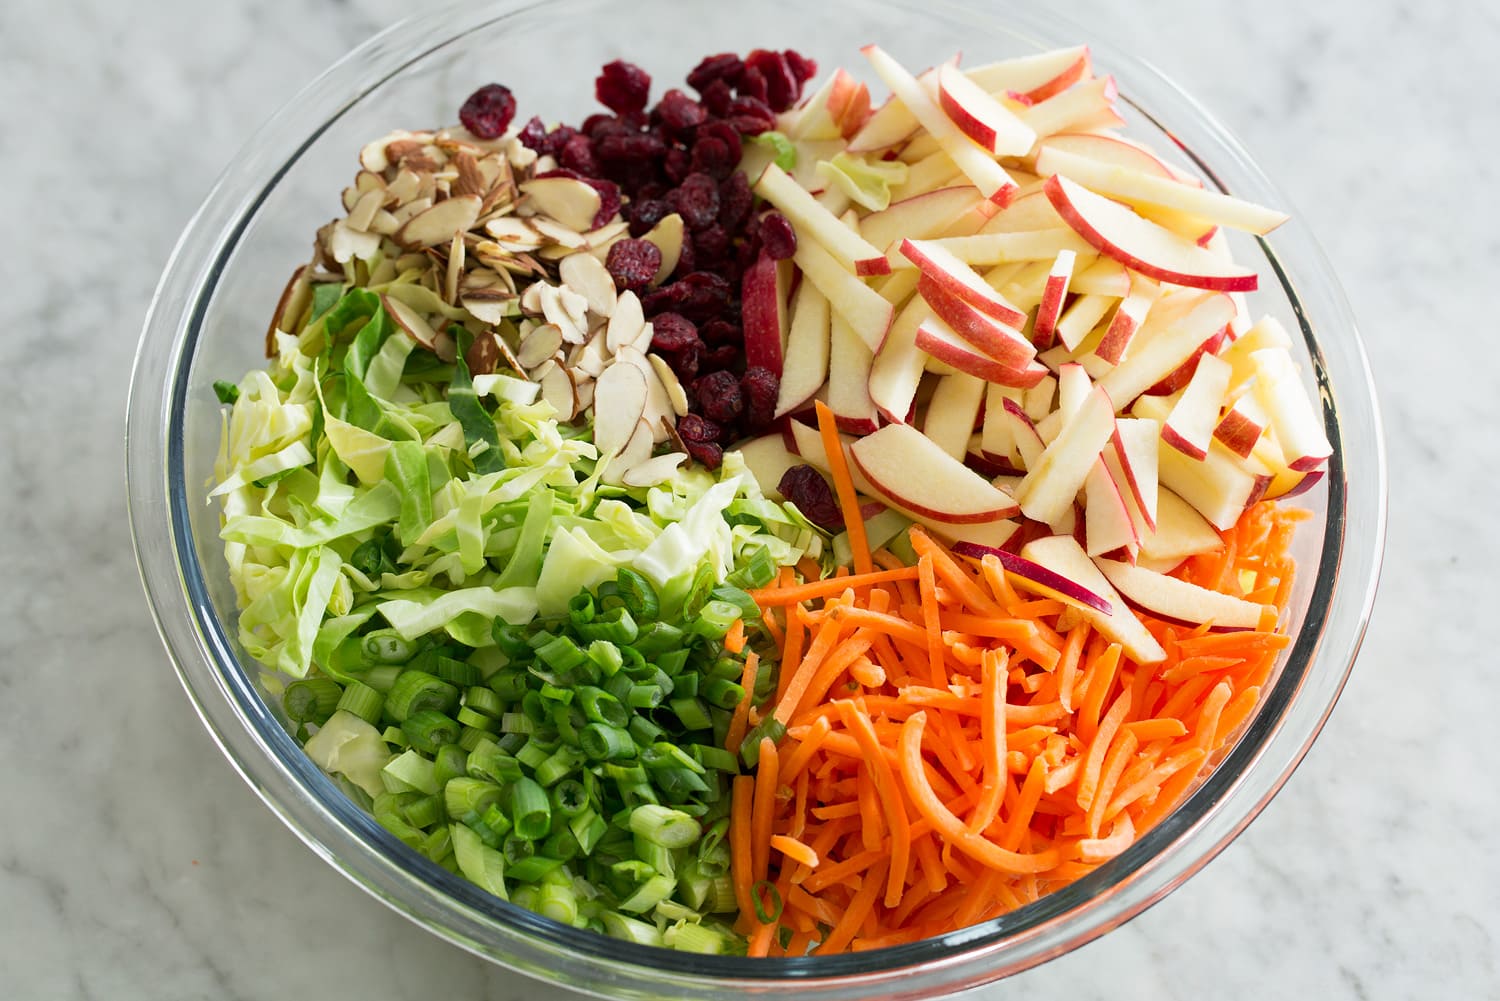 Apple slaw salad ingredients in bowl before mixing.